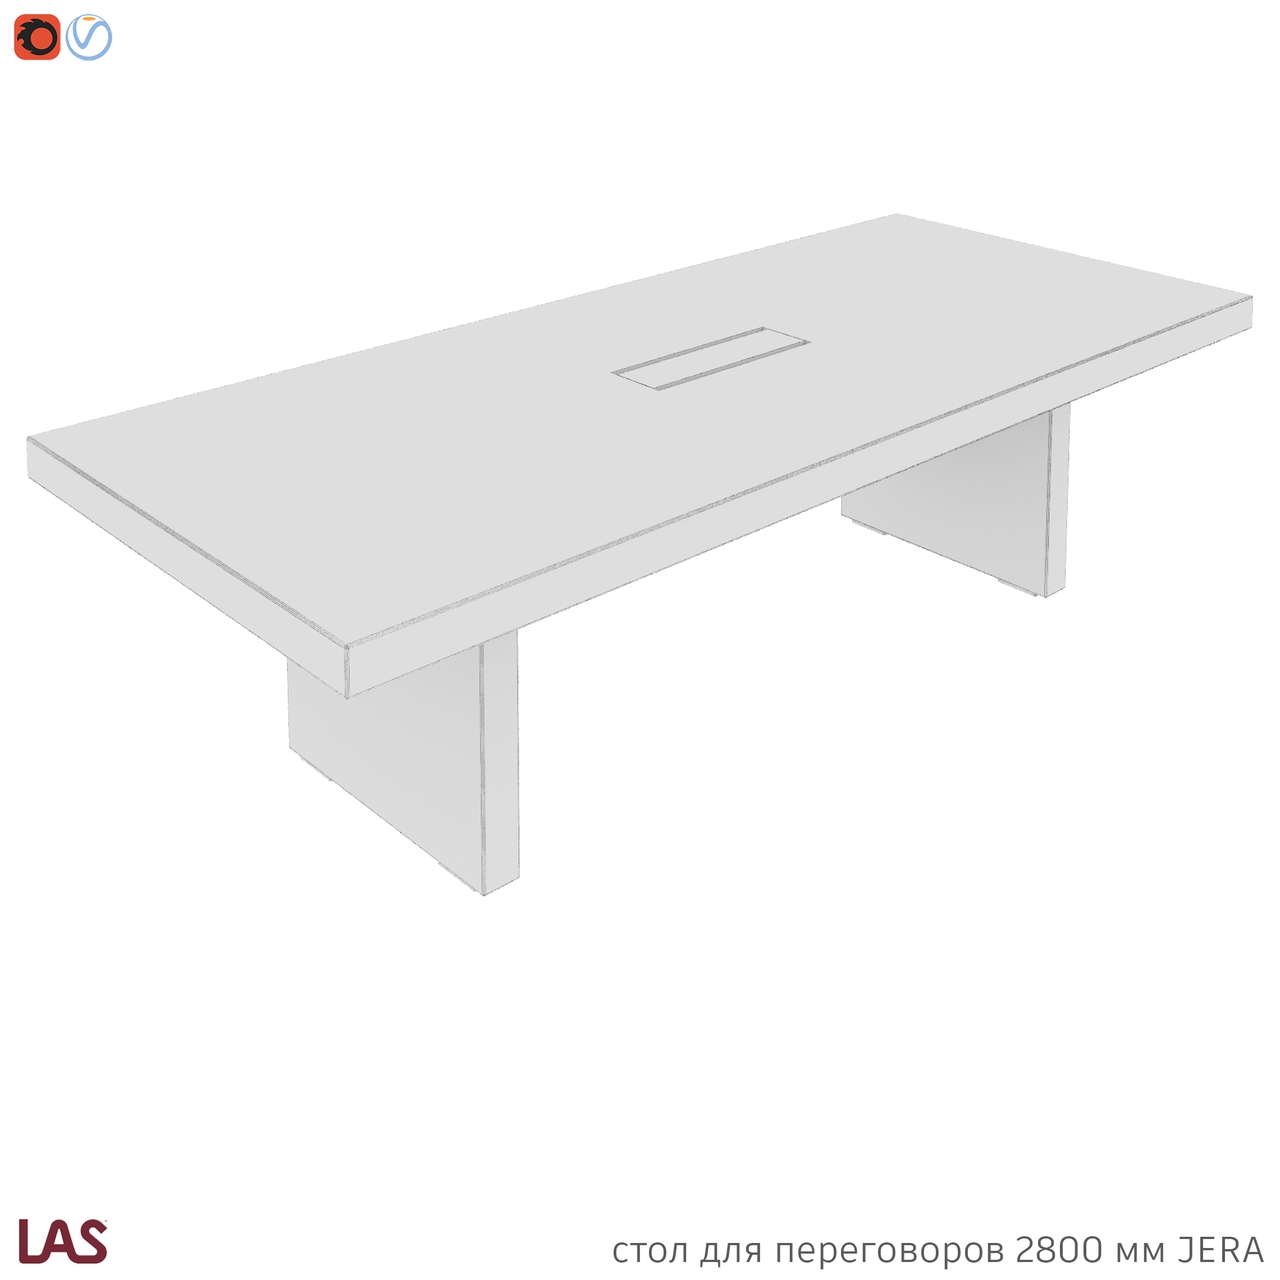 Превью G 3D-модели стола для переговоров LAS Jera 159914